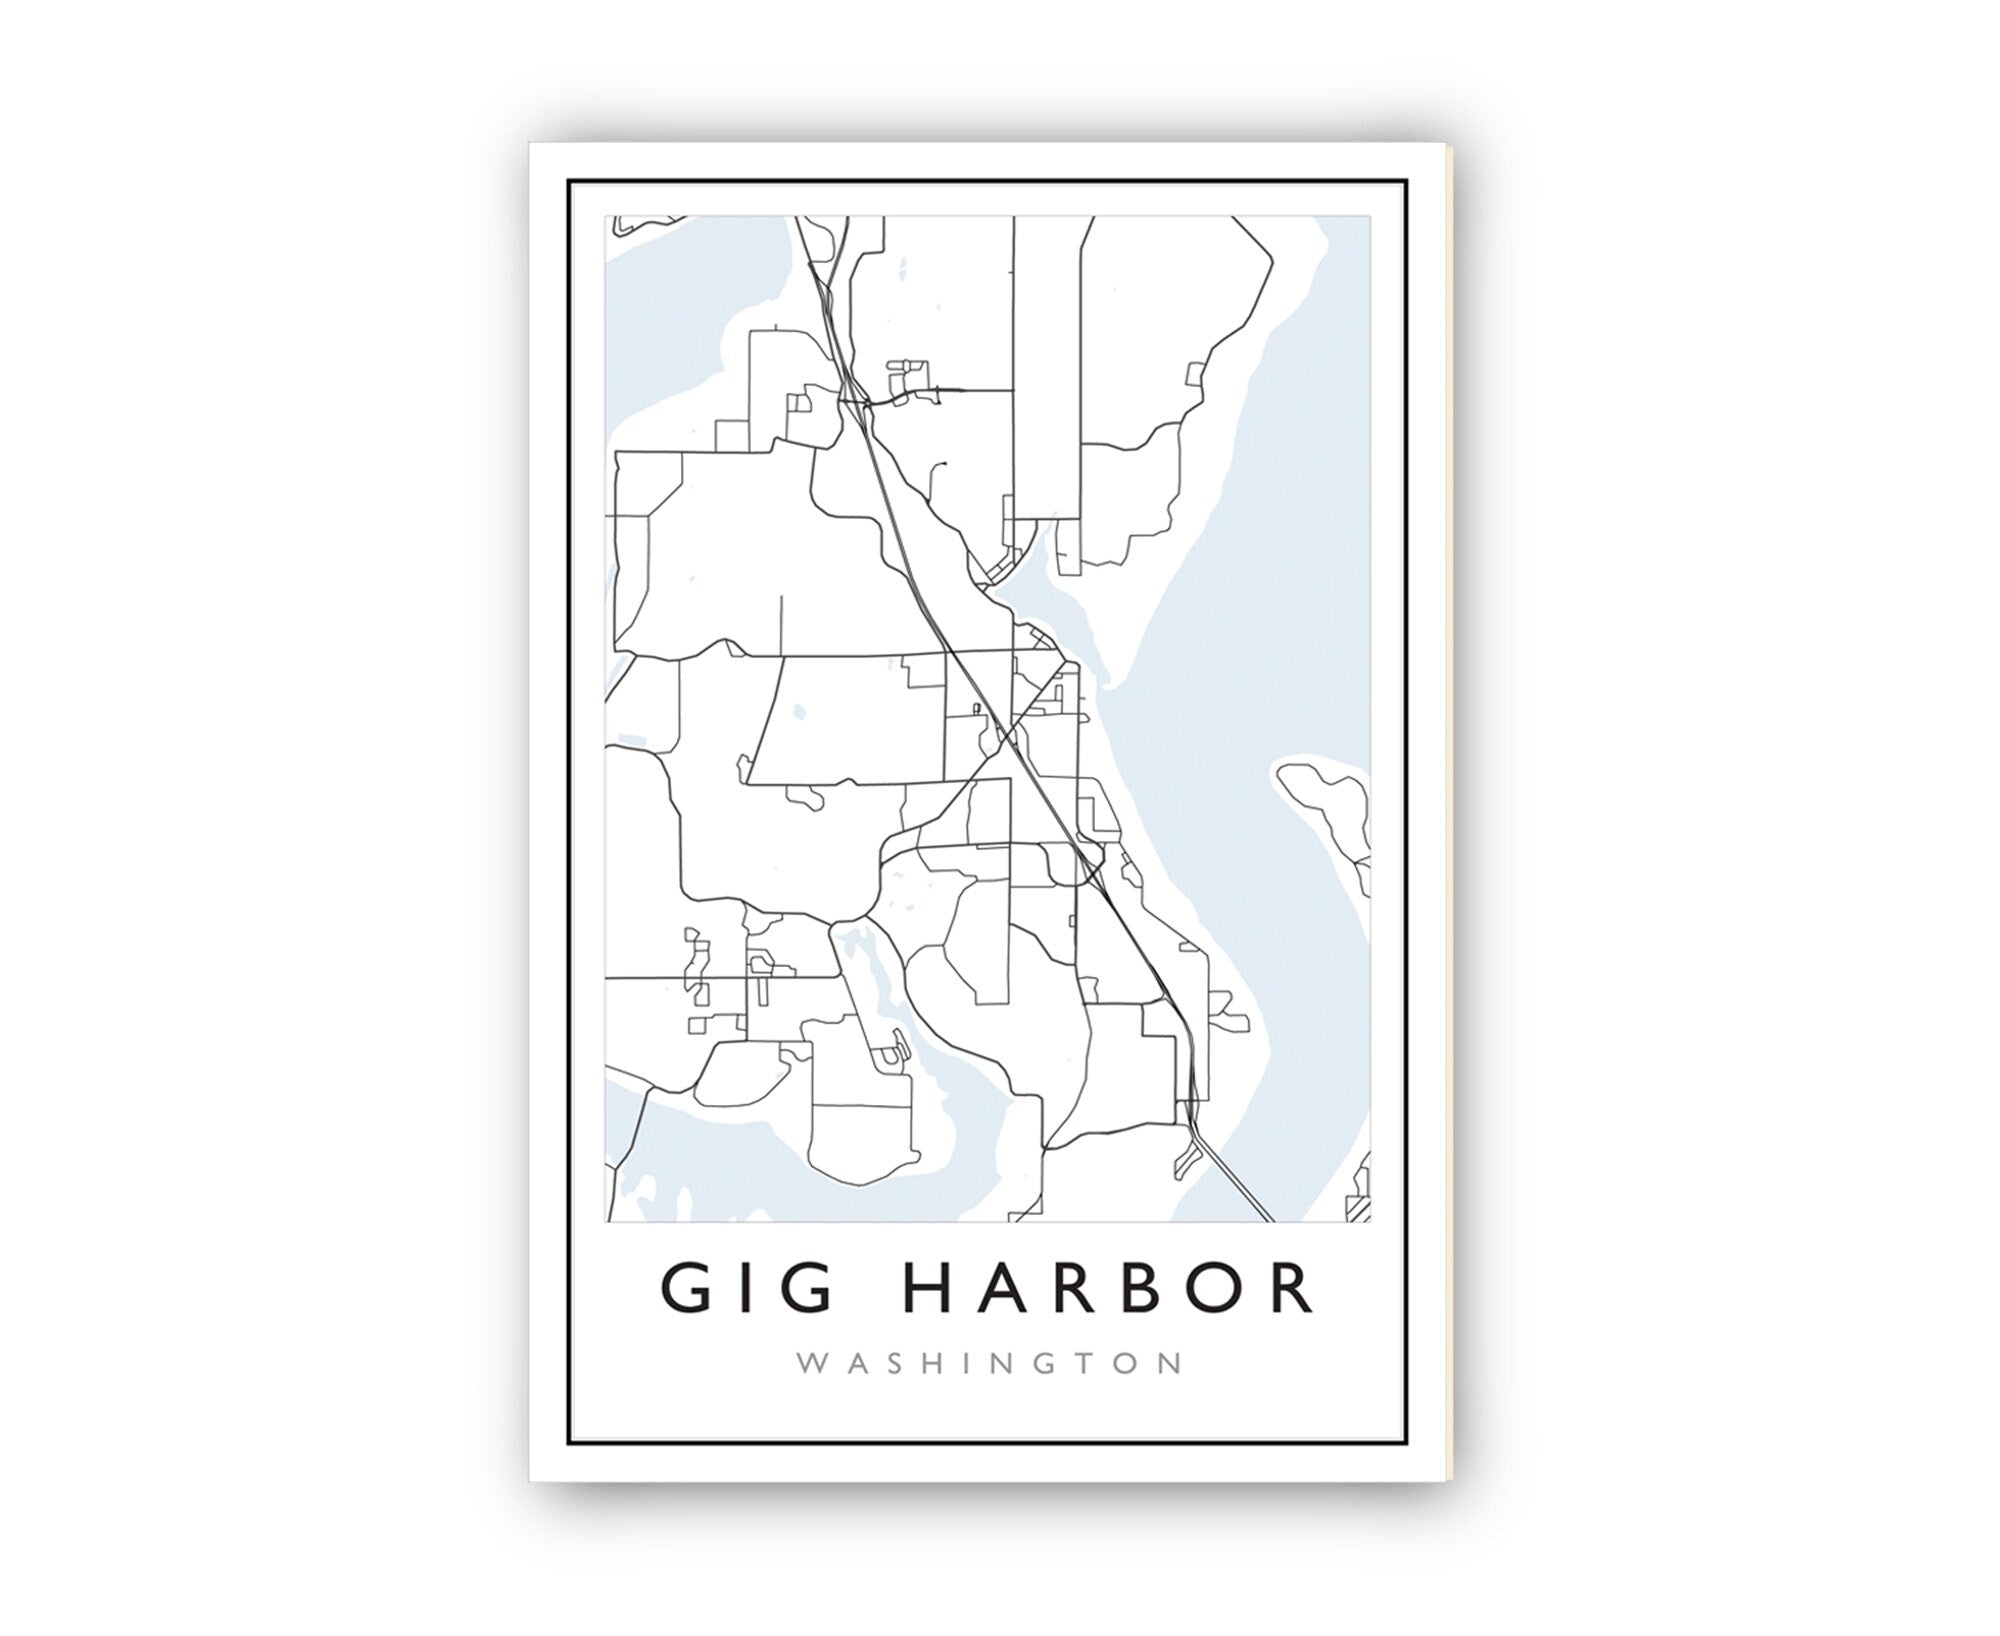 Gig Harbor Washington City Map, Washington City Road Map Poster, City Street Map Print, Modern US City Map, Home Art Decor, Office Wall Art